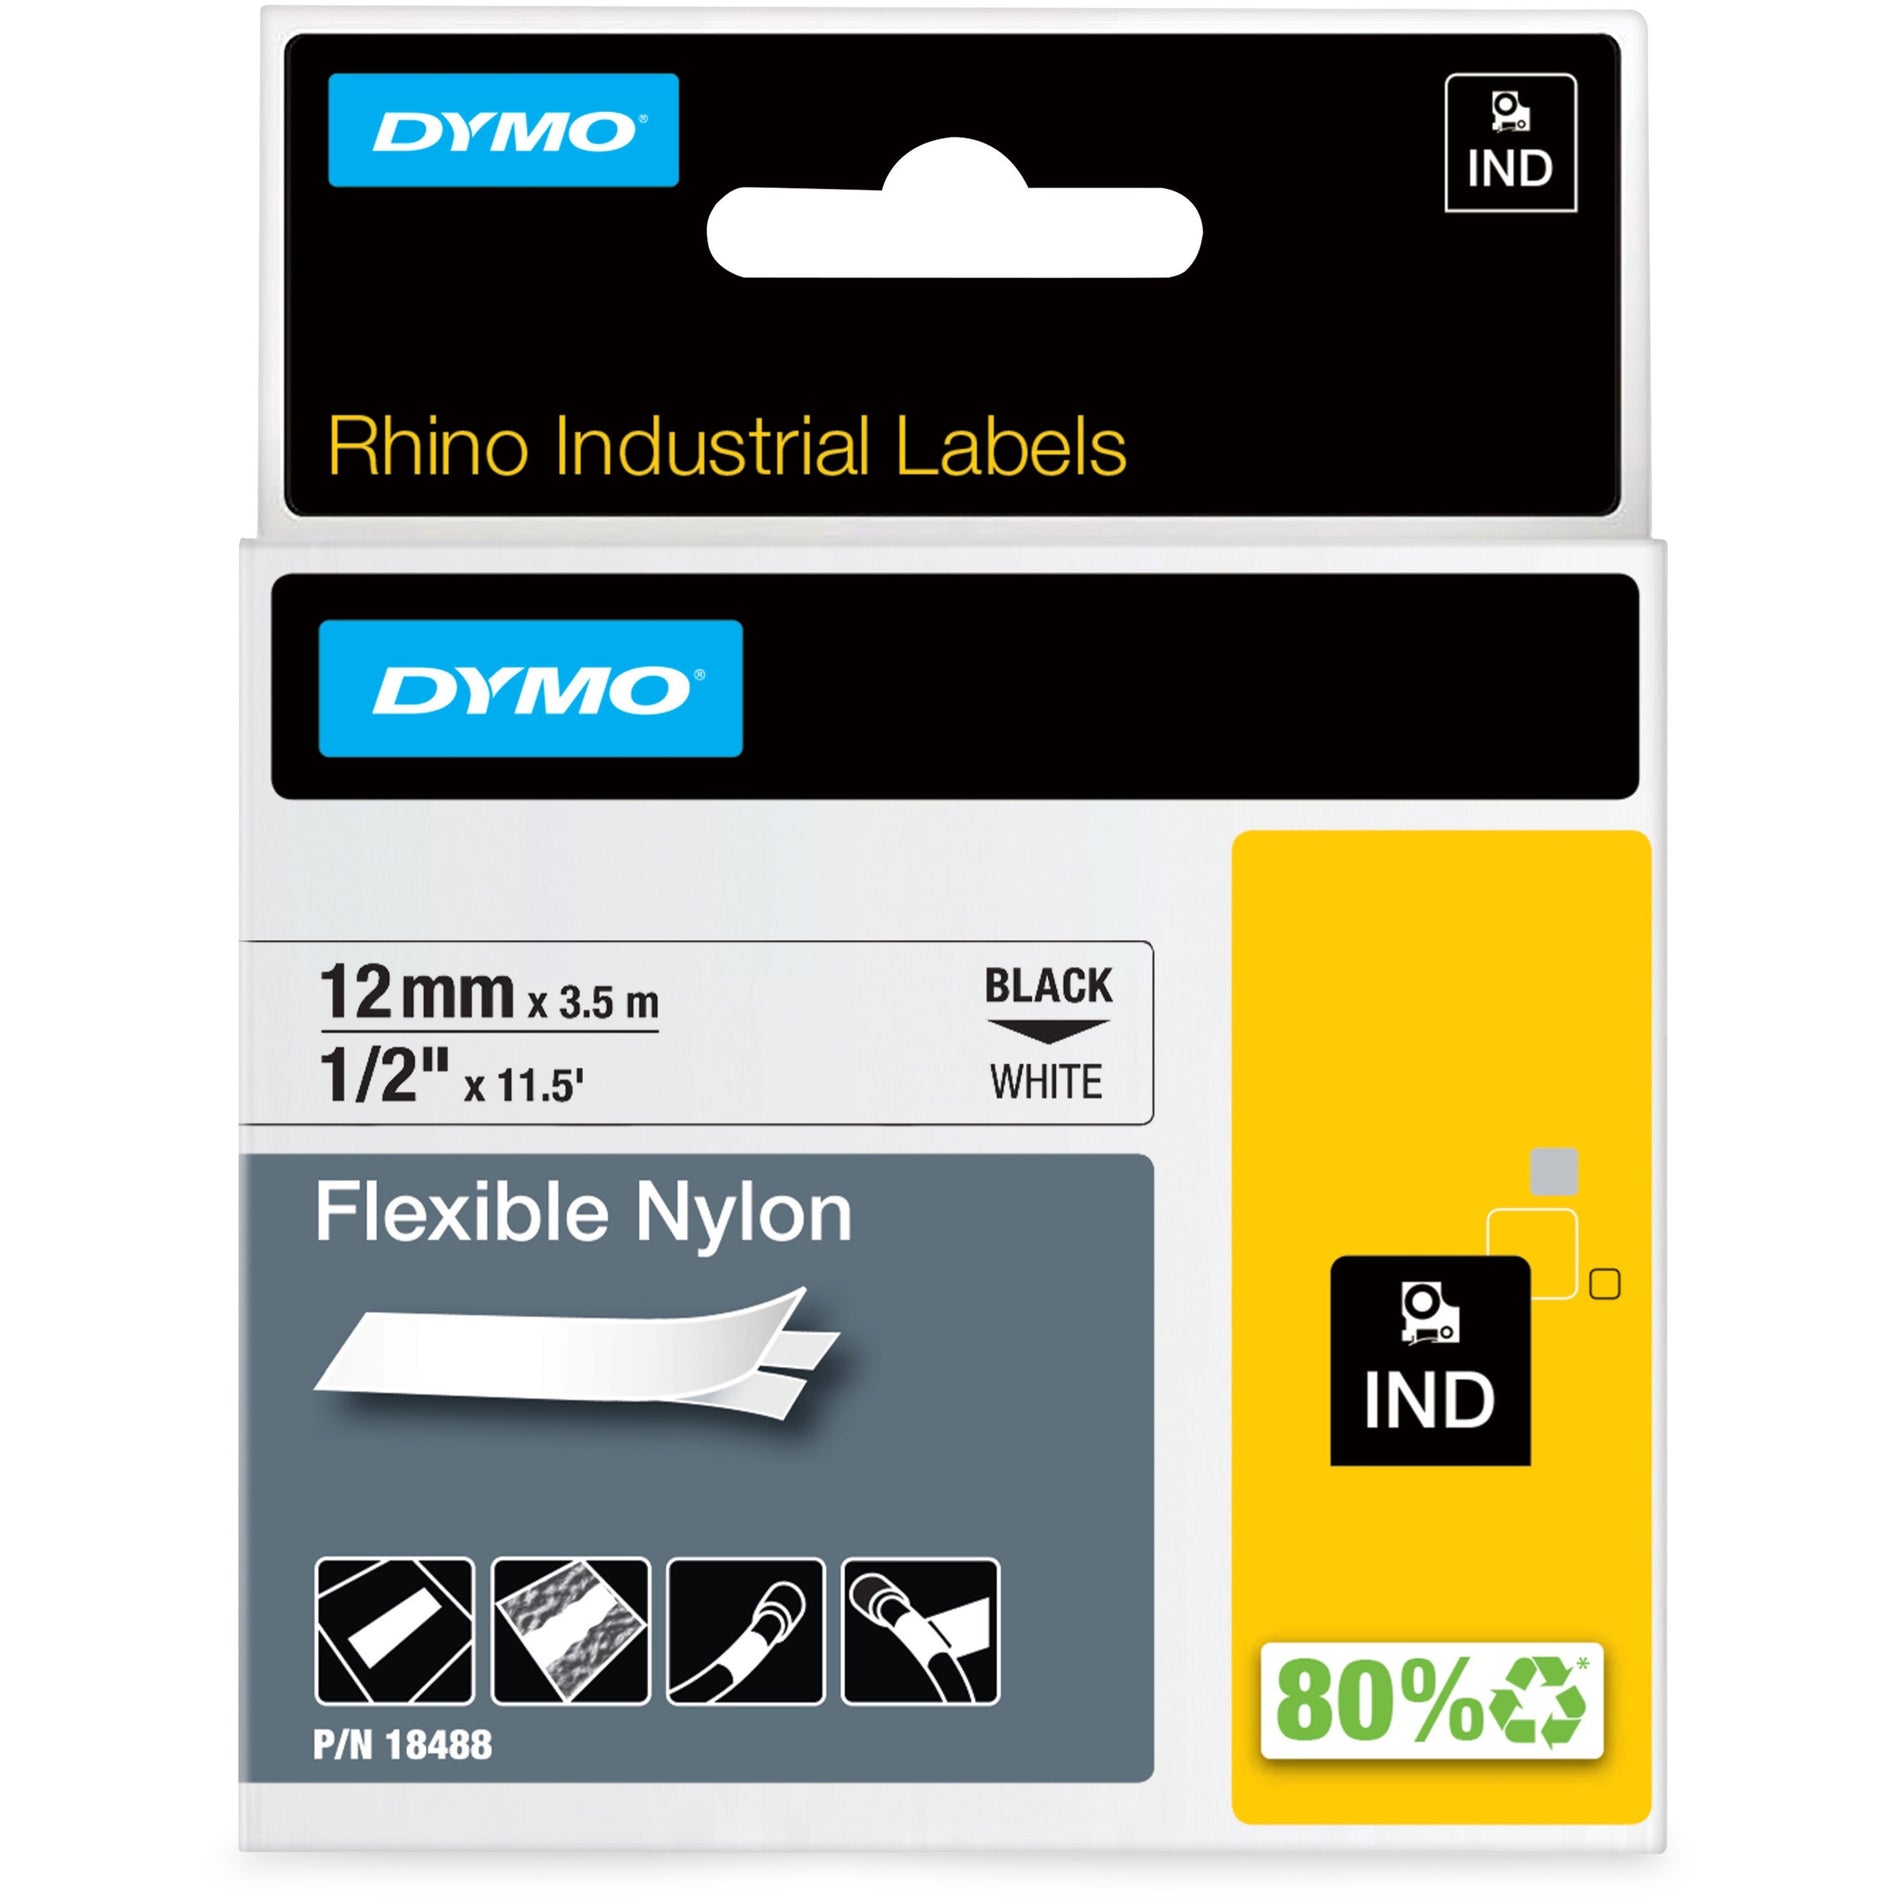 Dymo 18488 Rhino Flexible Nylon Labels, 1/2"x11.5', White, Flexible and Temperature Resistant